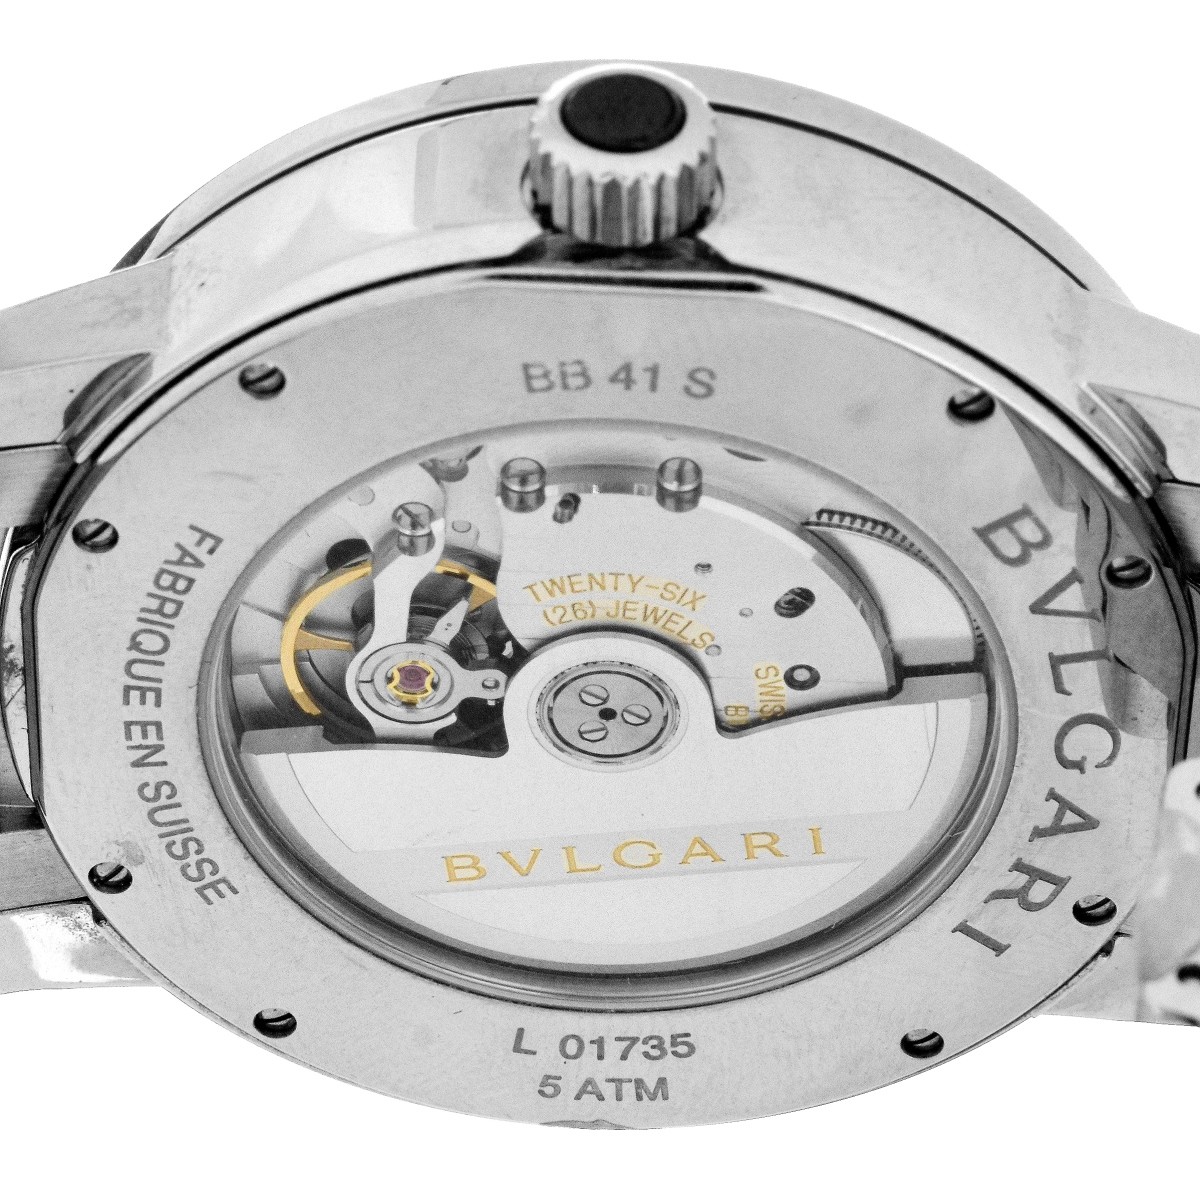 Bulgari Stainless Steel Watch